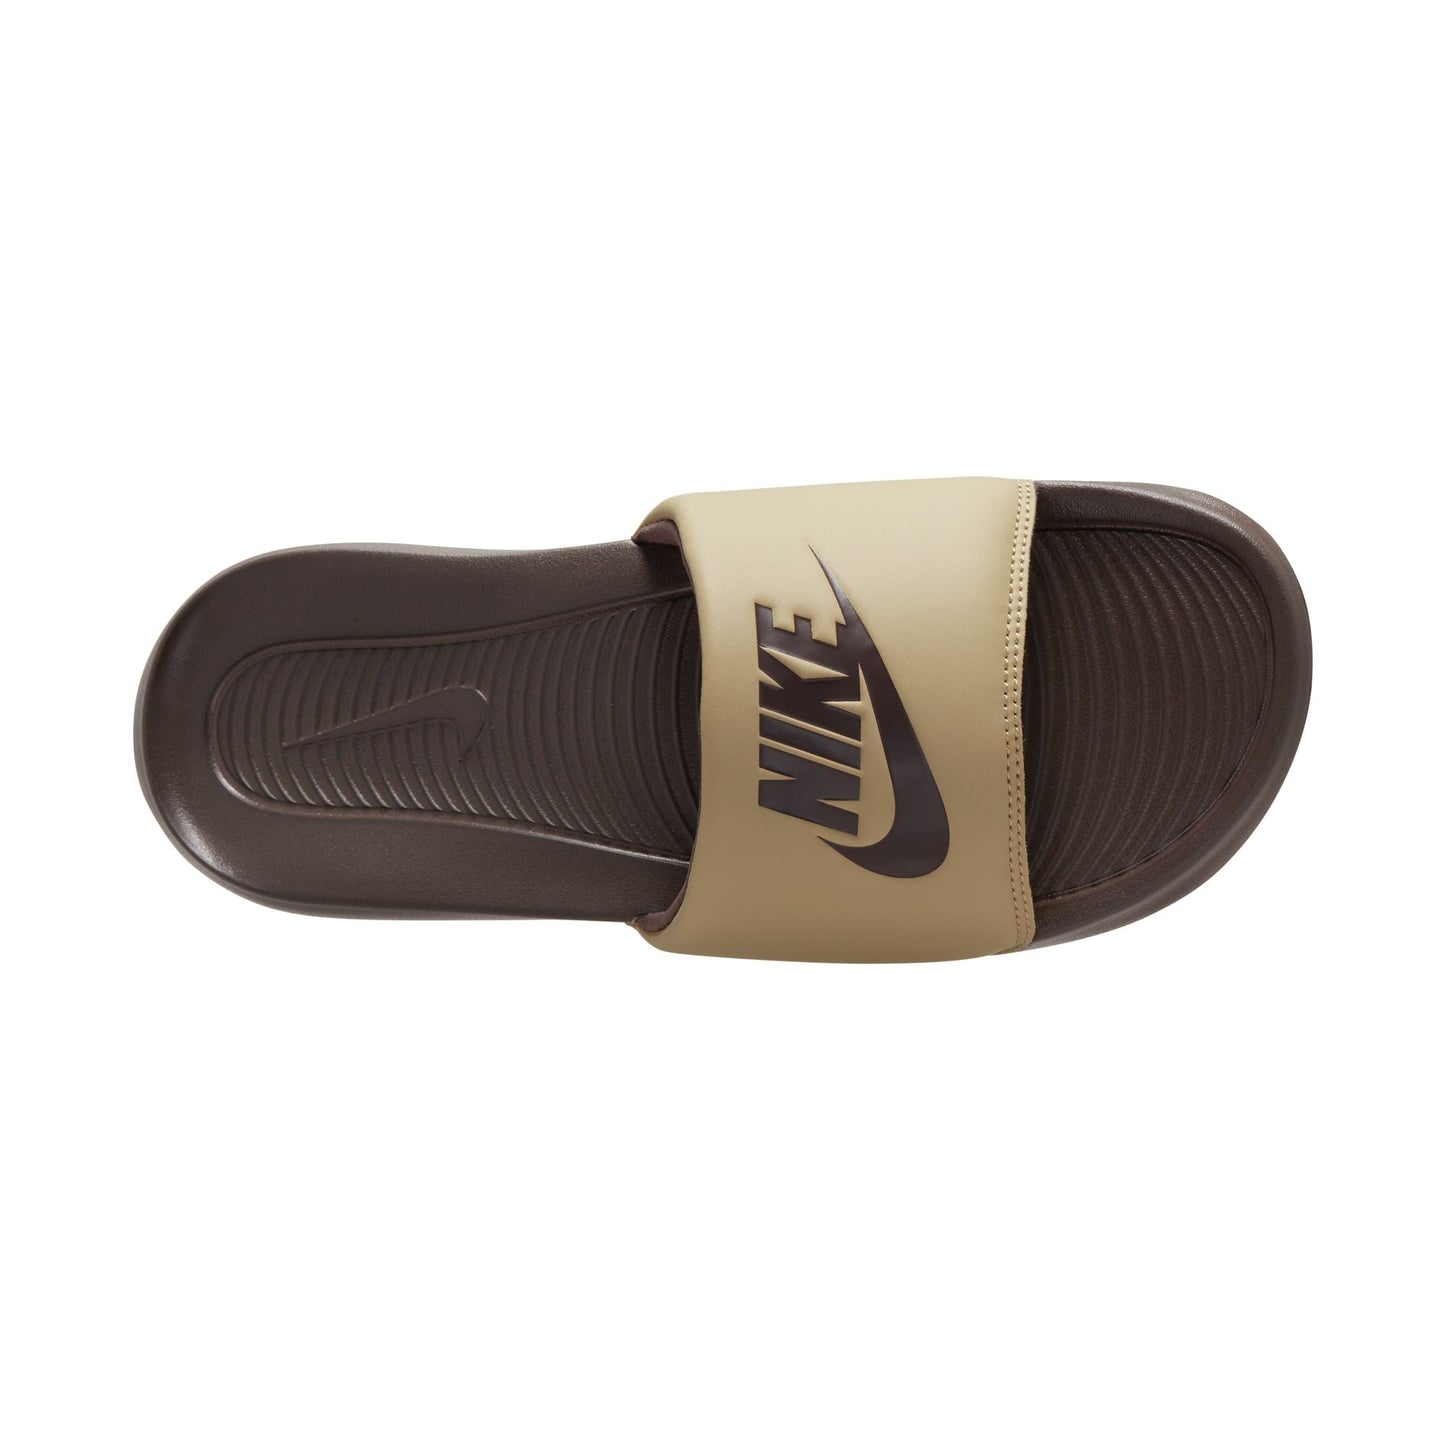 Nike SB - Victori One Slide - Wheat Grass - Velocity 21